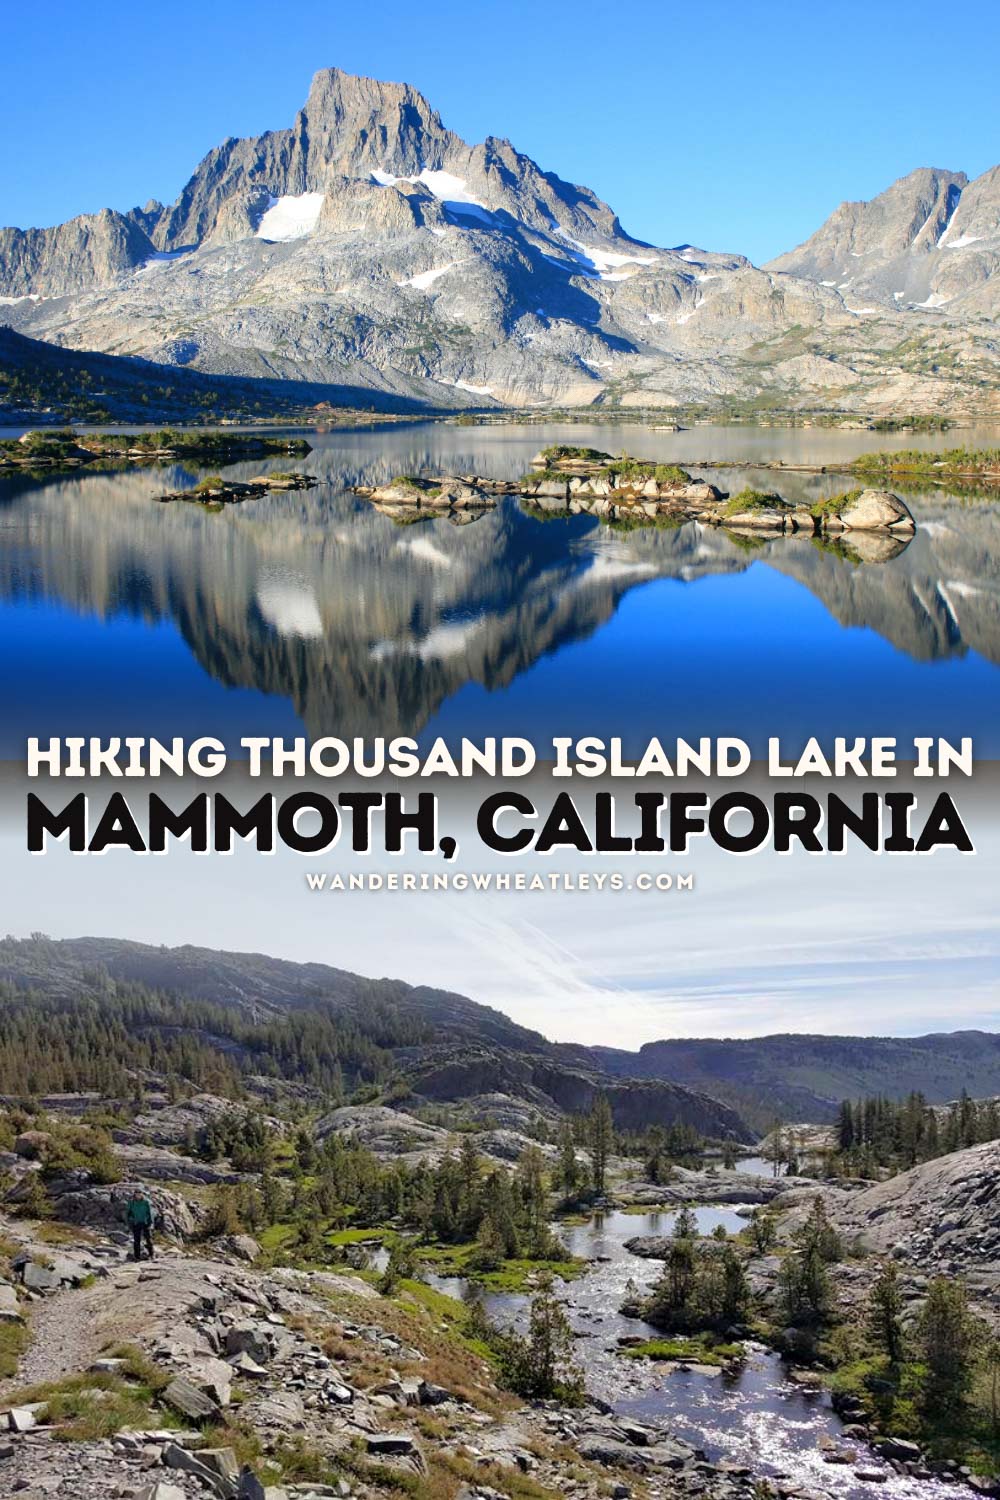 Hiking Thousand Island Lake in Mammoth, California